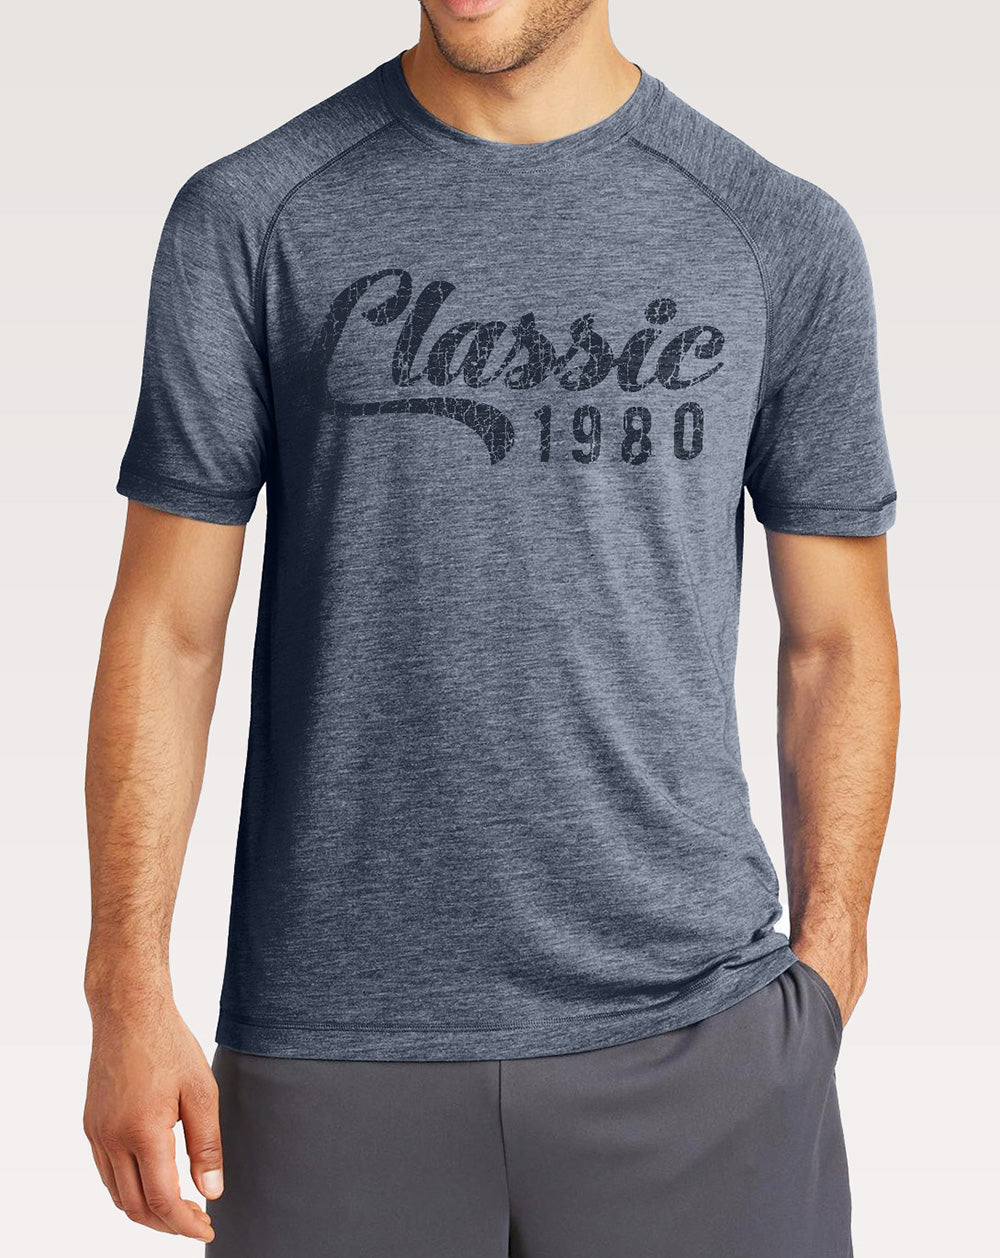 Personalized Men's Classic Birthday Shirt